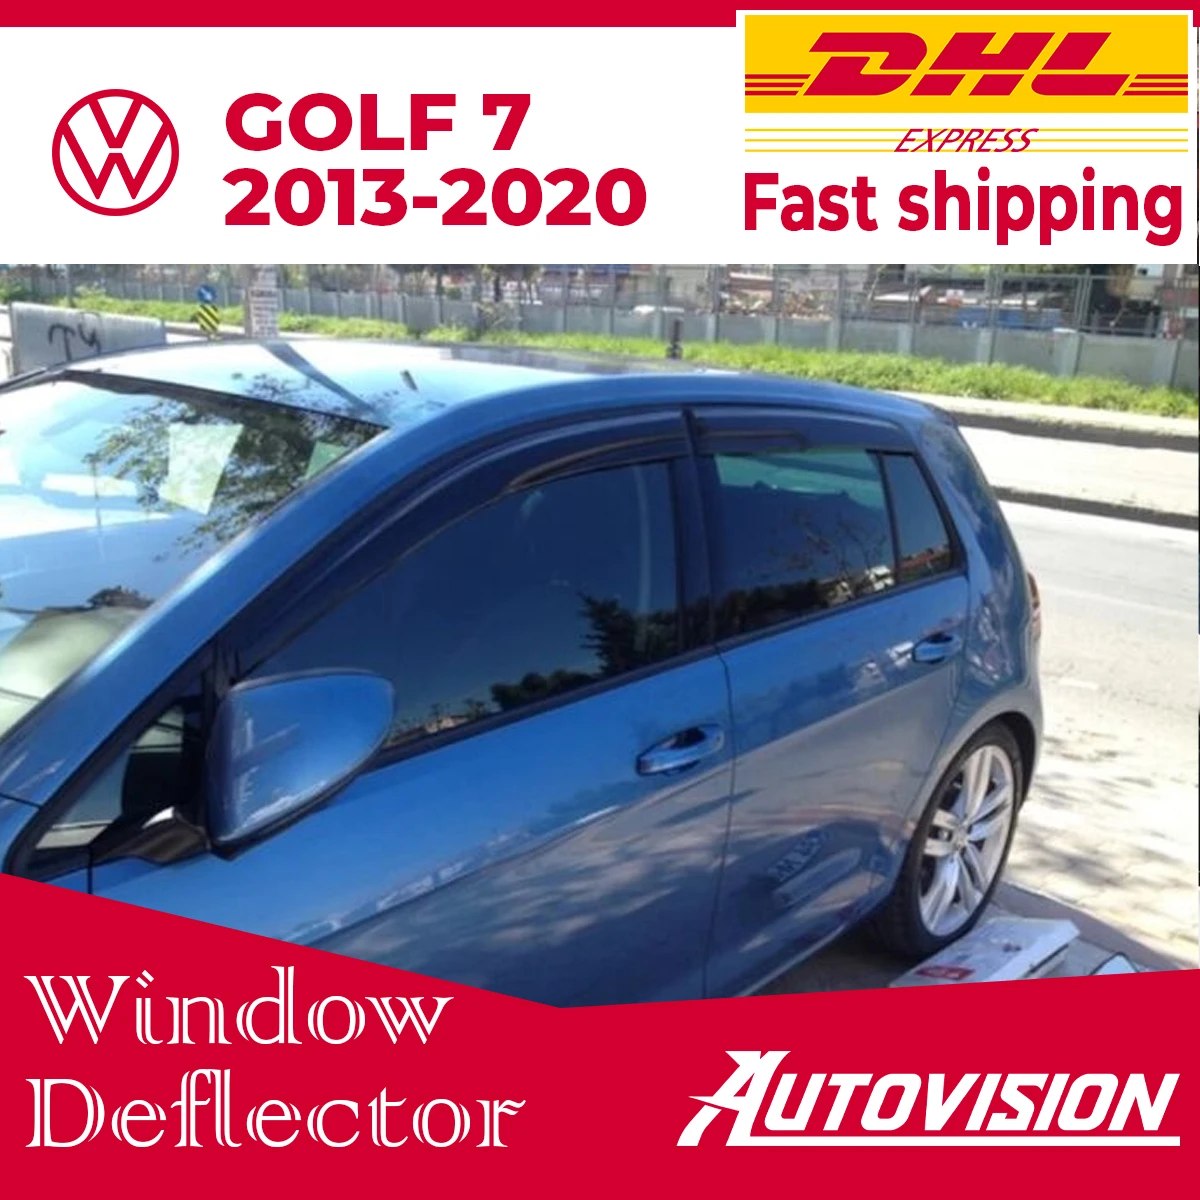 Car Window Accessories for VW Golf 7 VII 2013 2014 2015 2016 2017 2018 2019 2020 Window Deflector Rain Guard Visor Awnings truck stickers